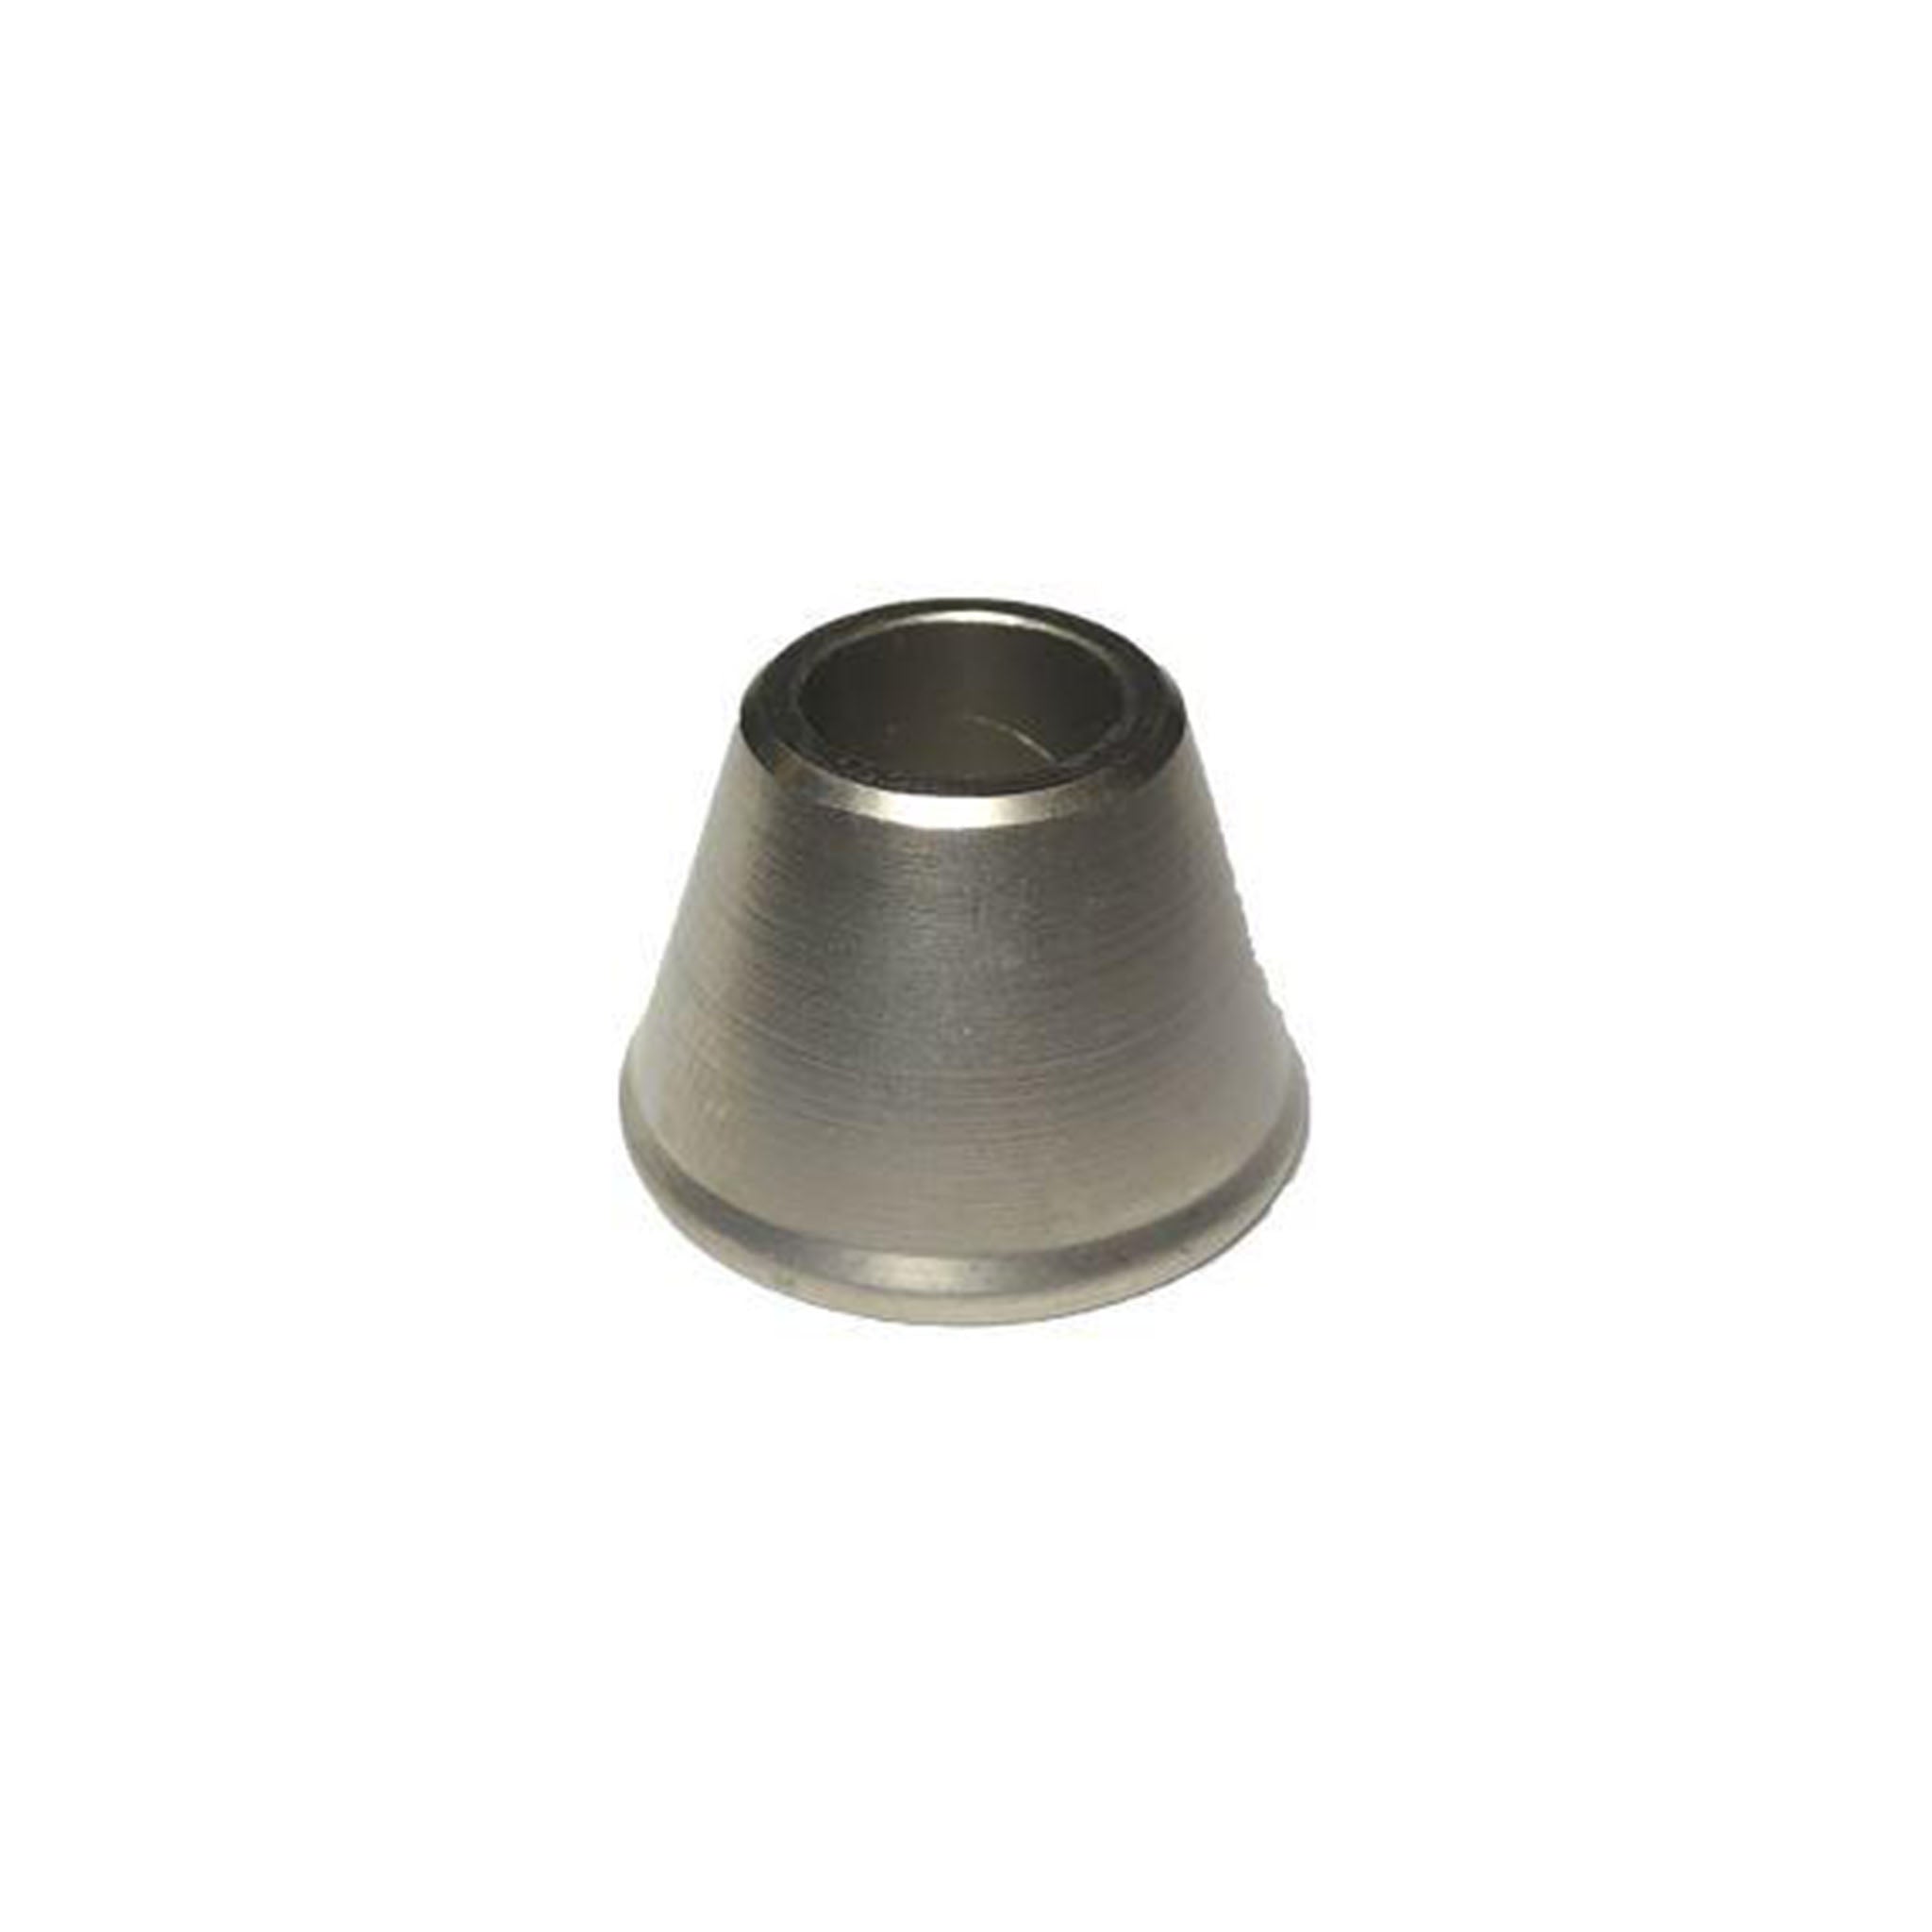 Stainless Steel Wear Cone - Slim 1/8